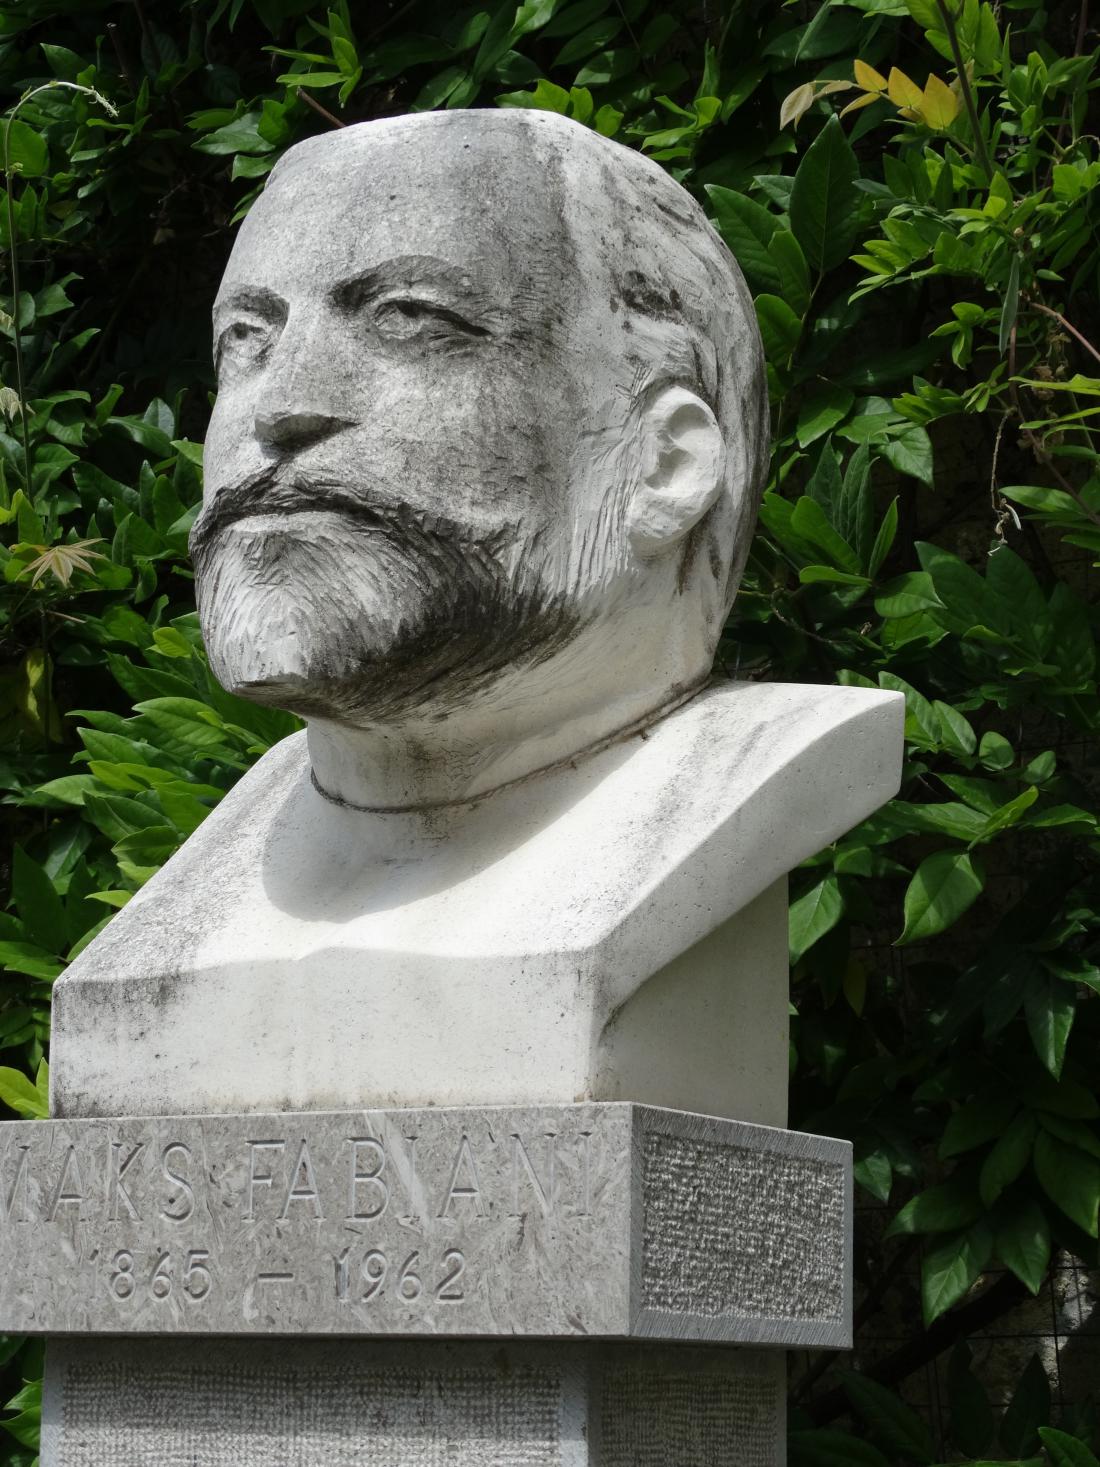 Kip Maksa Fabianija na posestvu Malgajevih v Kobdilju je poklon velikemu arhitektu in urbanistu. FOTO: Katja Željan